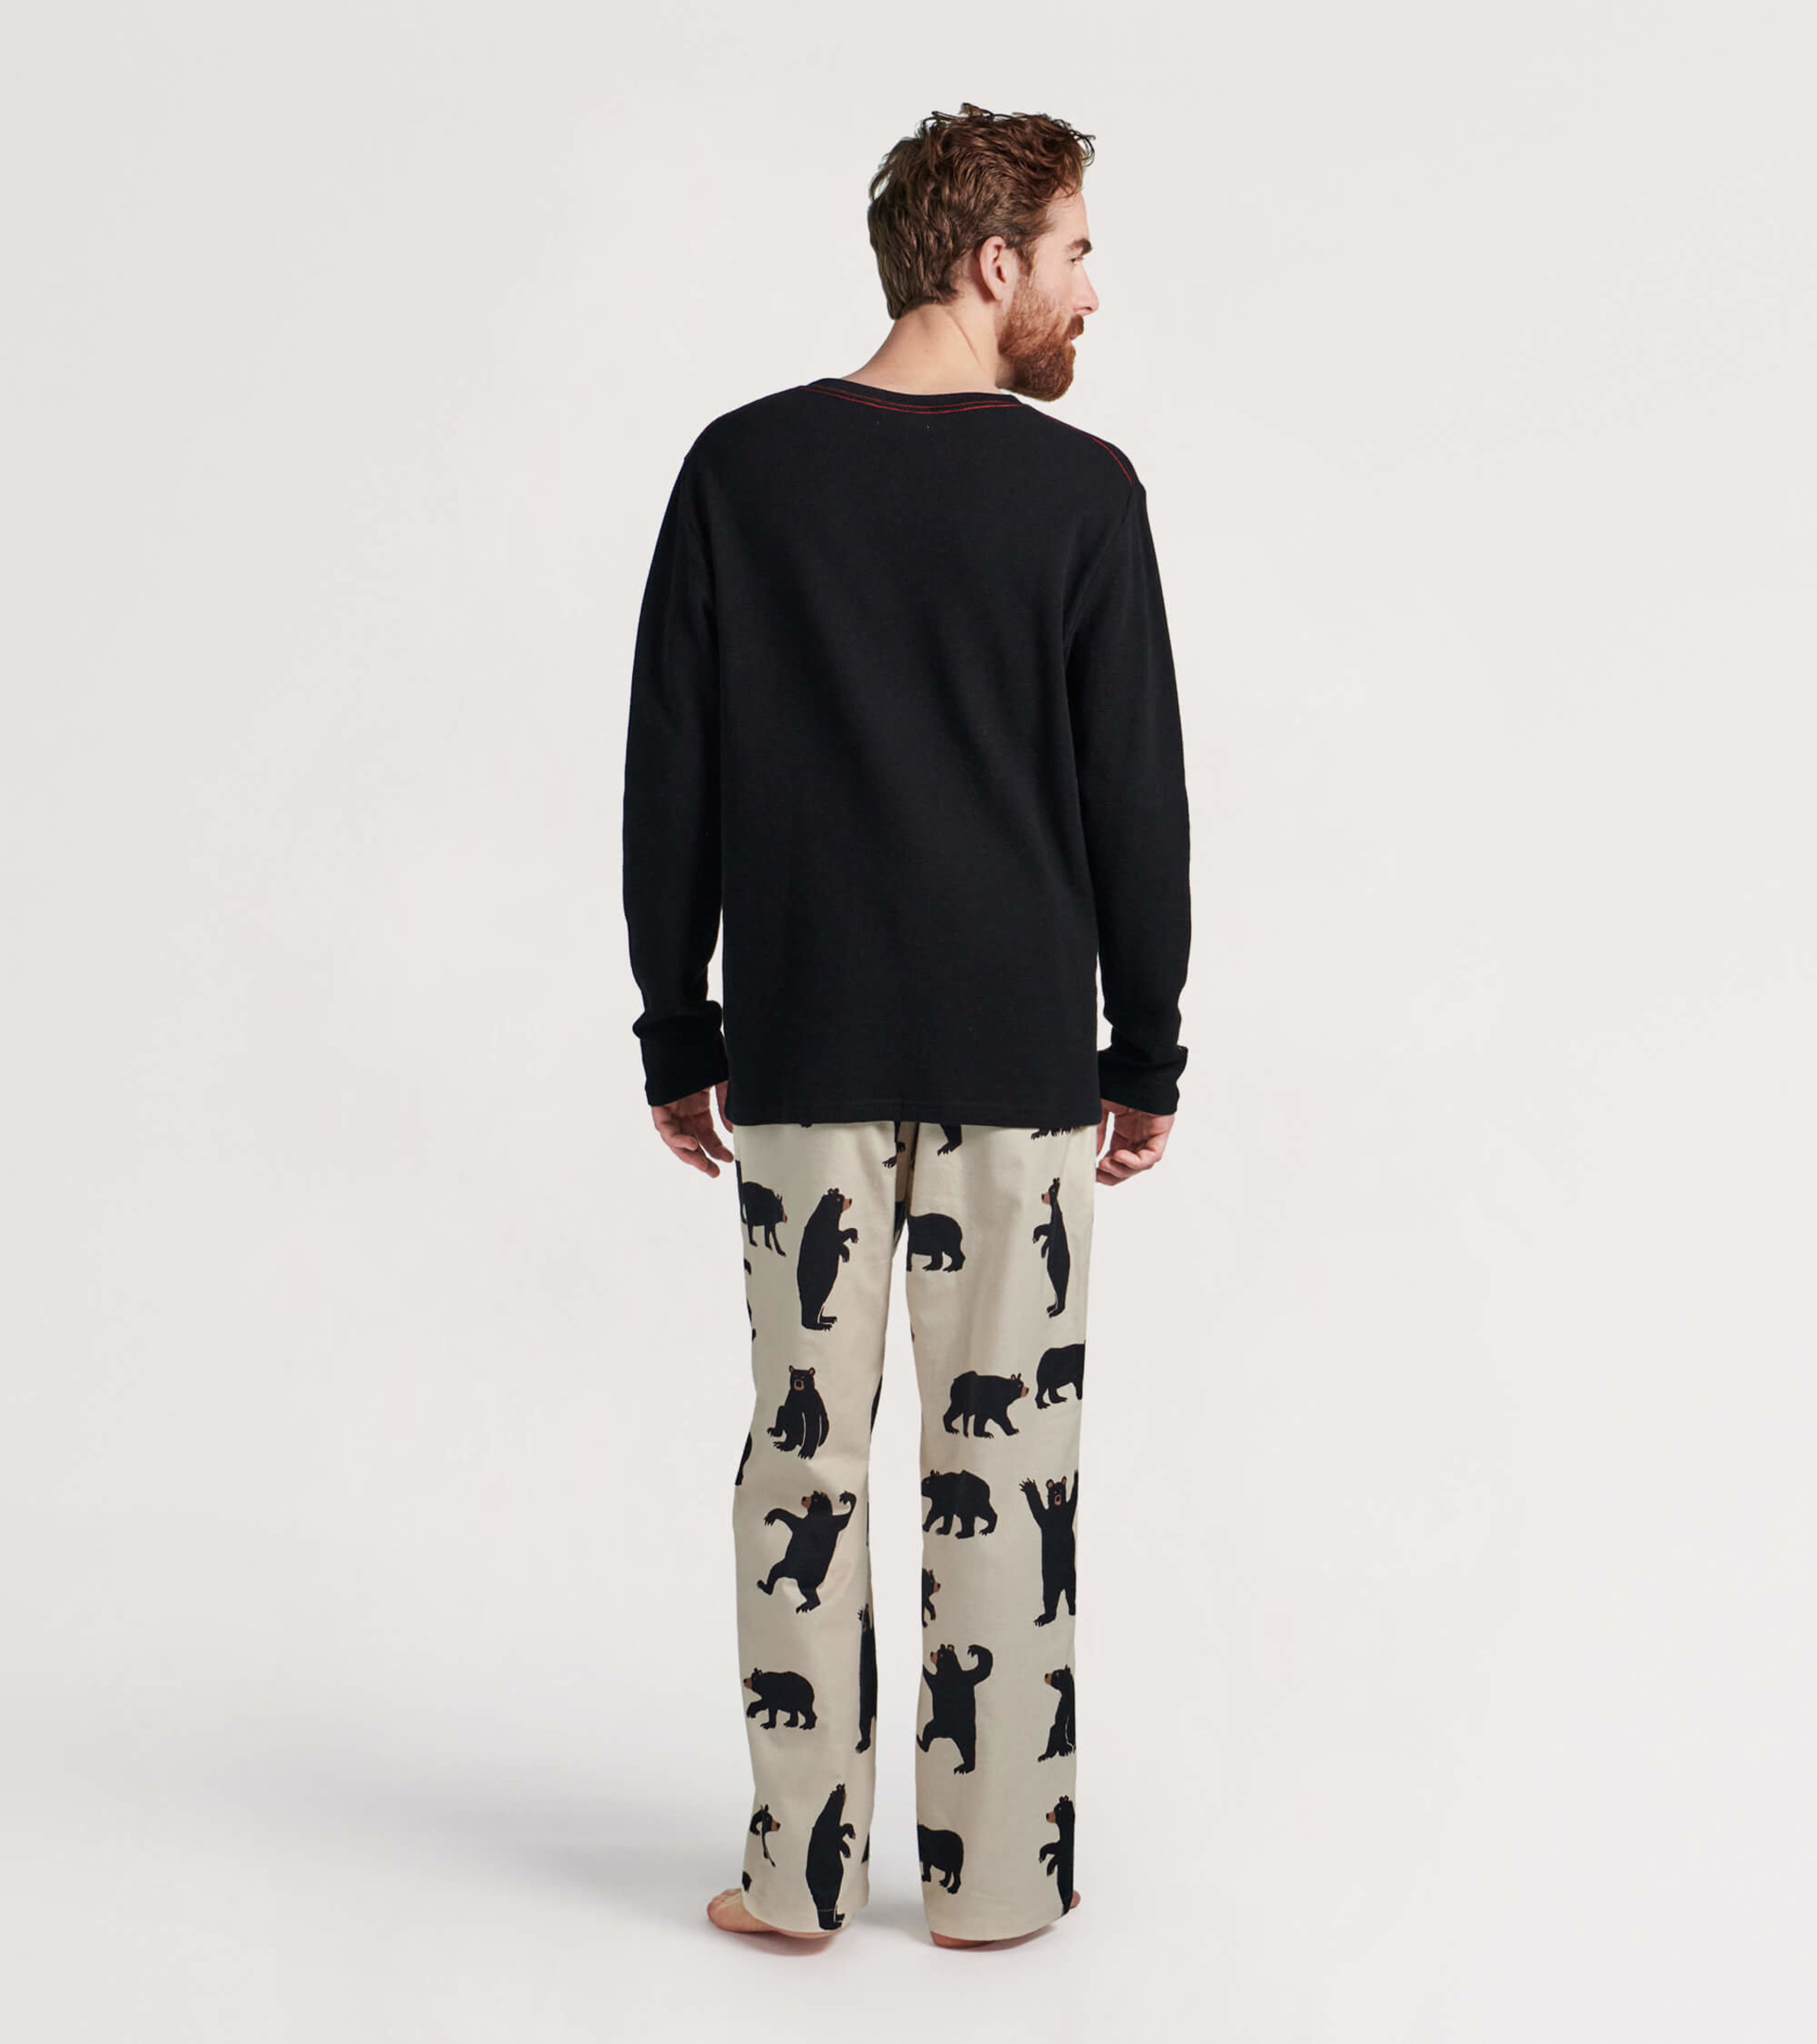 Men's Slim Fit Stretch Plaid Pants Flannel Jogger Pajama Lounge